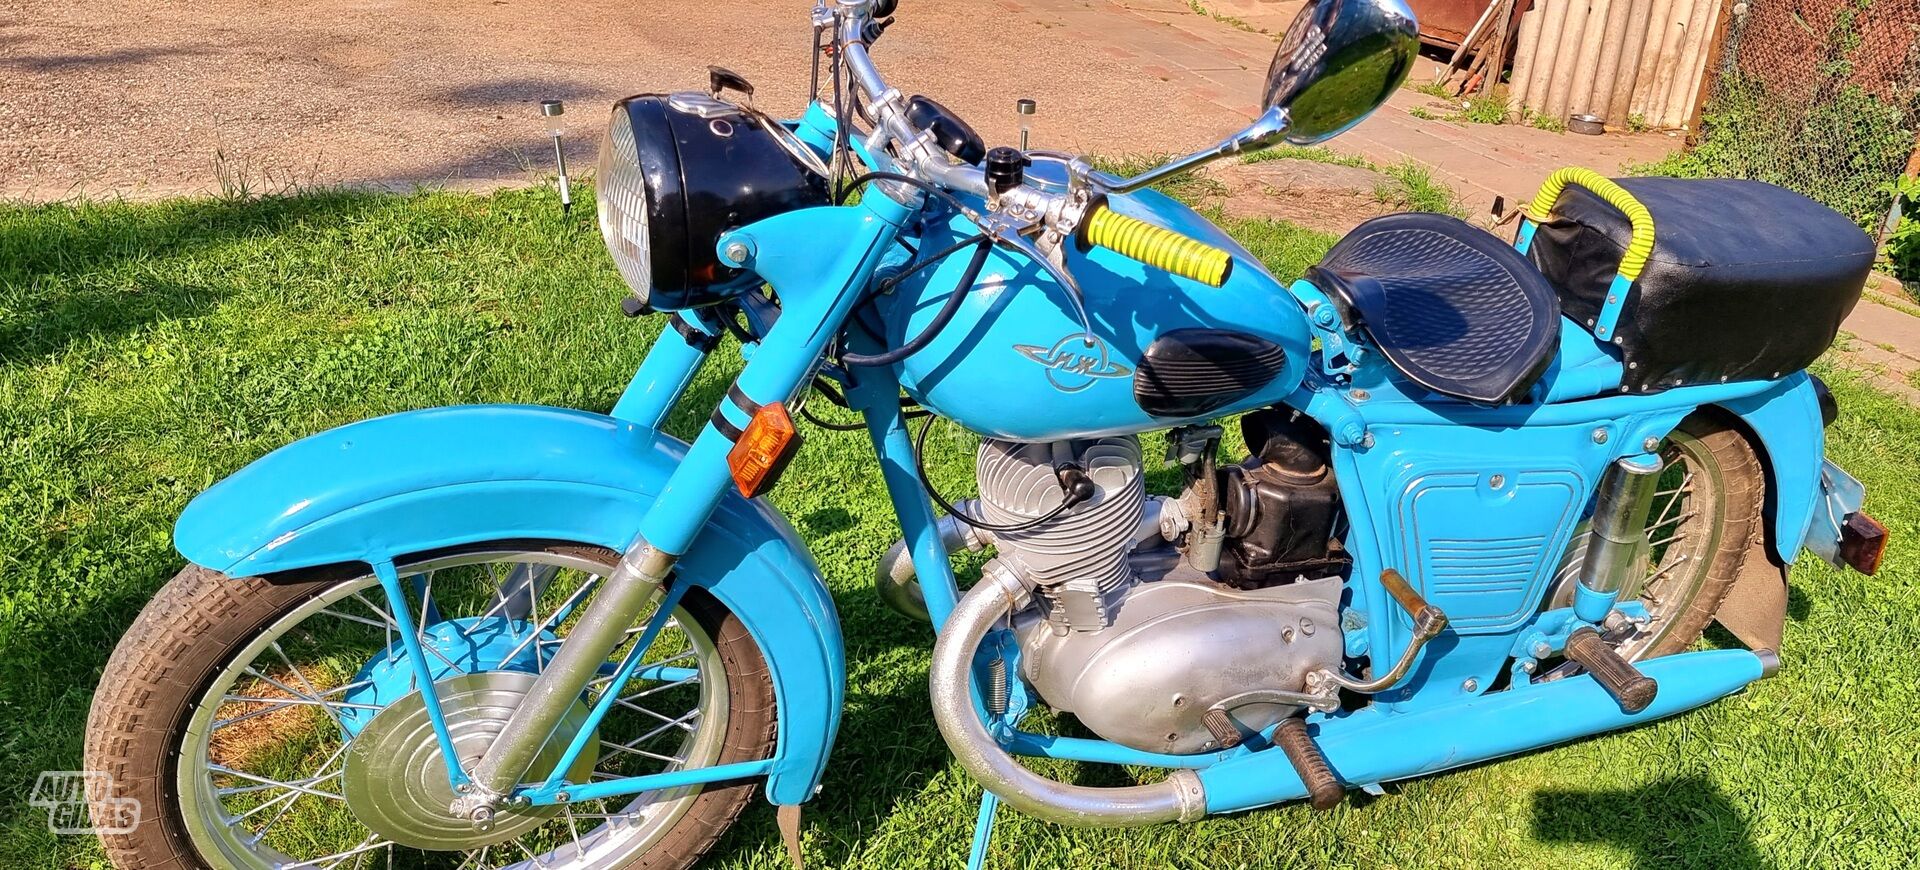 Izh 56 1959 y Classical / Streetbike motorcycle